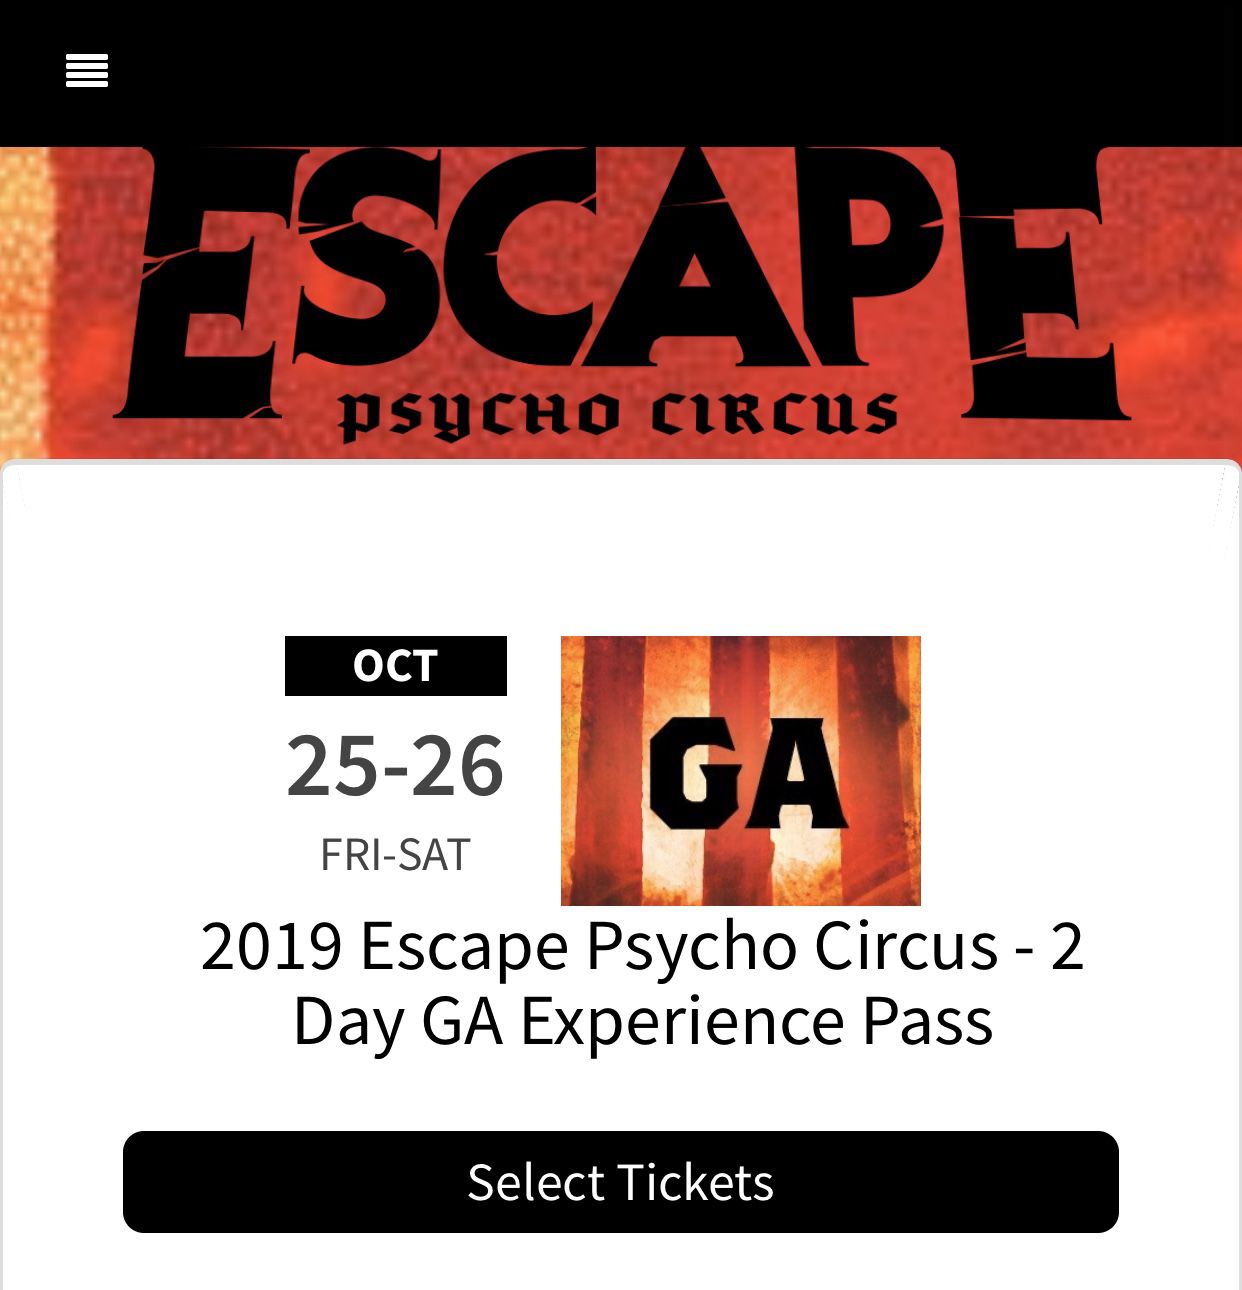 Escape psycho circus